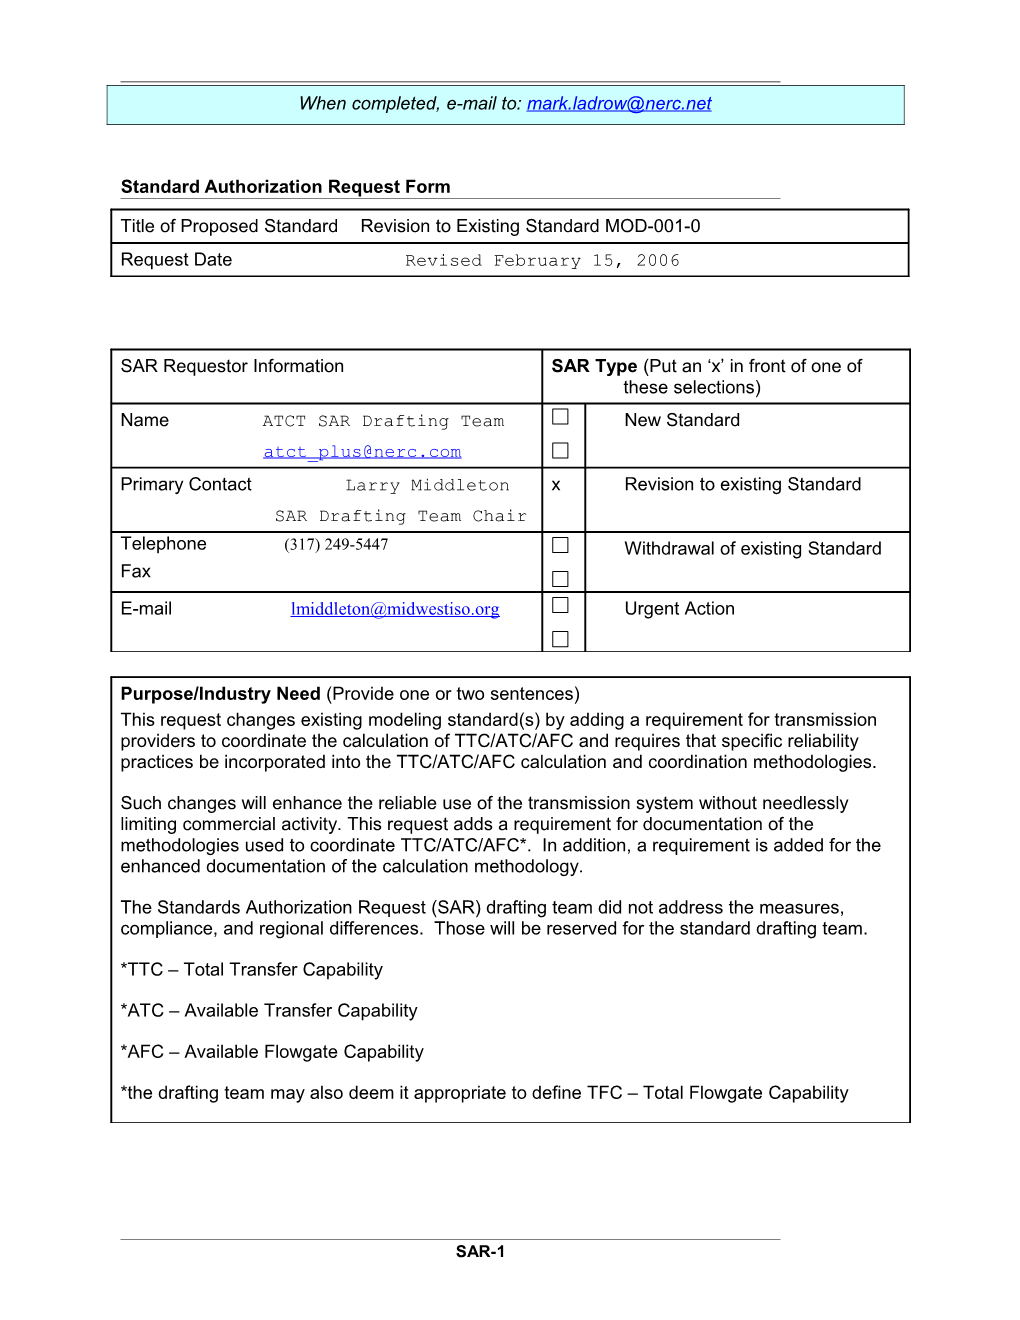 Standards Authorization Request Form